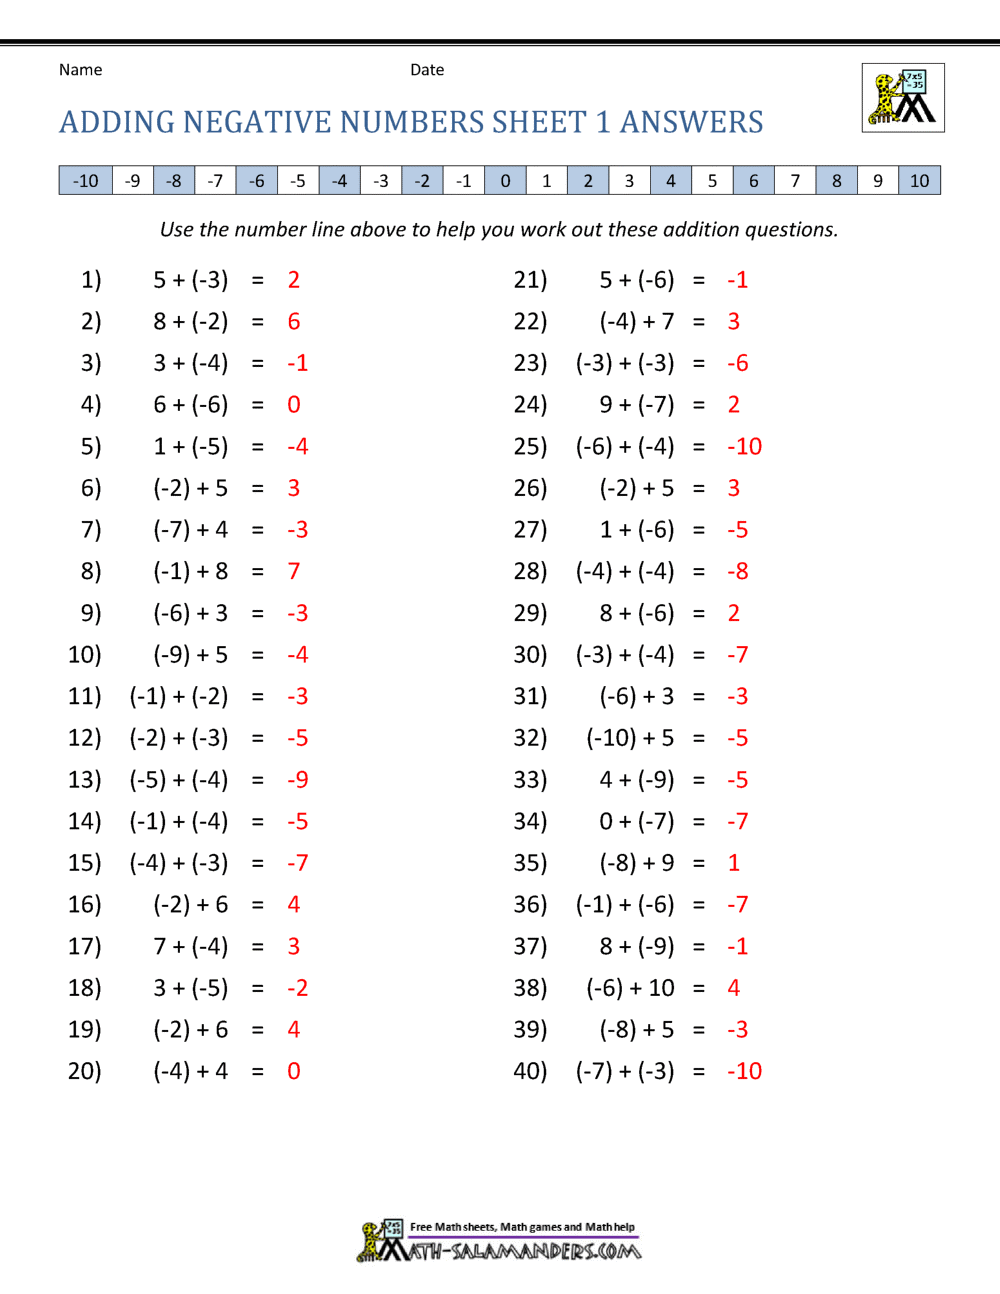 Adding Positive and Negative Numbers Inside Adding Integers Worksheet Pdf